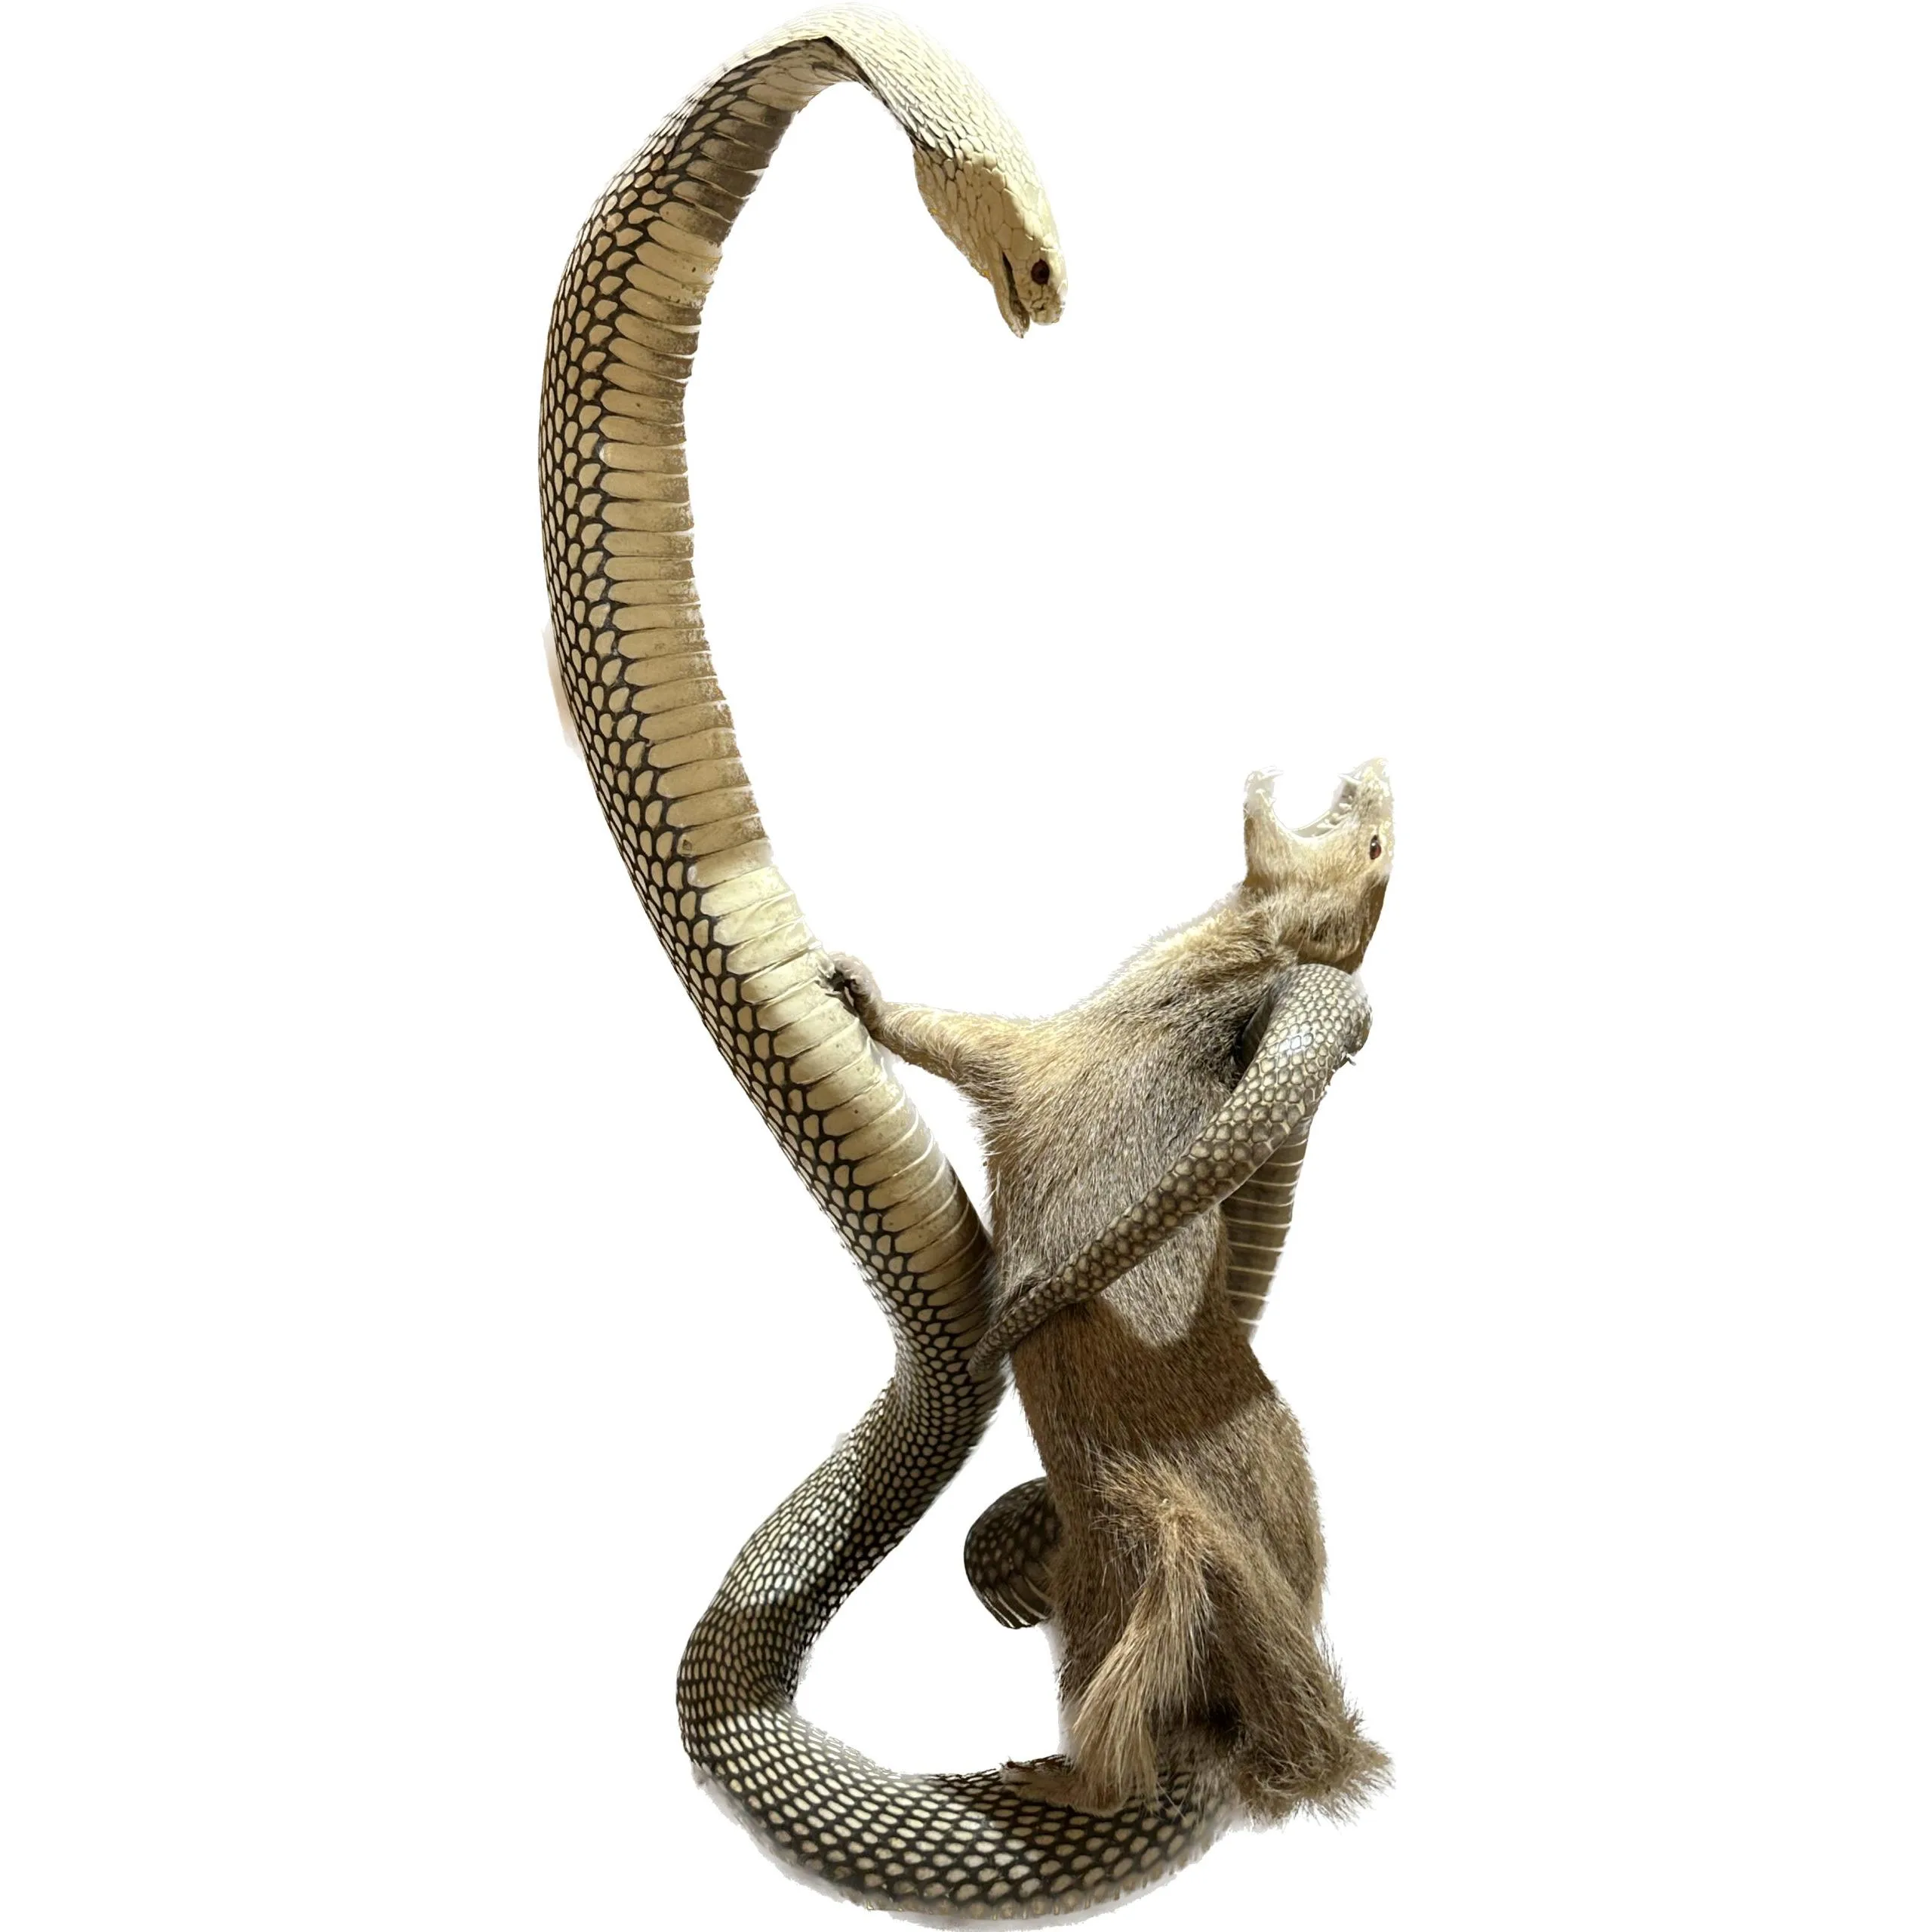 Cobra fighting Mongoose Taxidermy Prehistoric Online